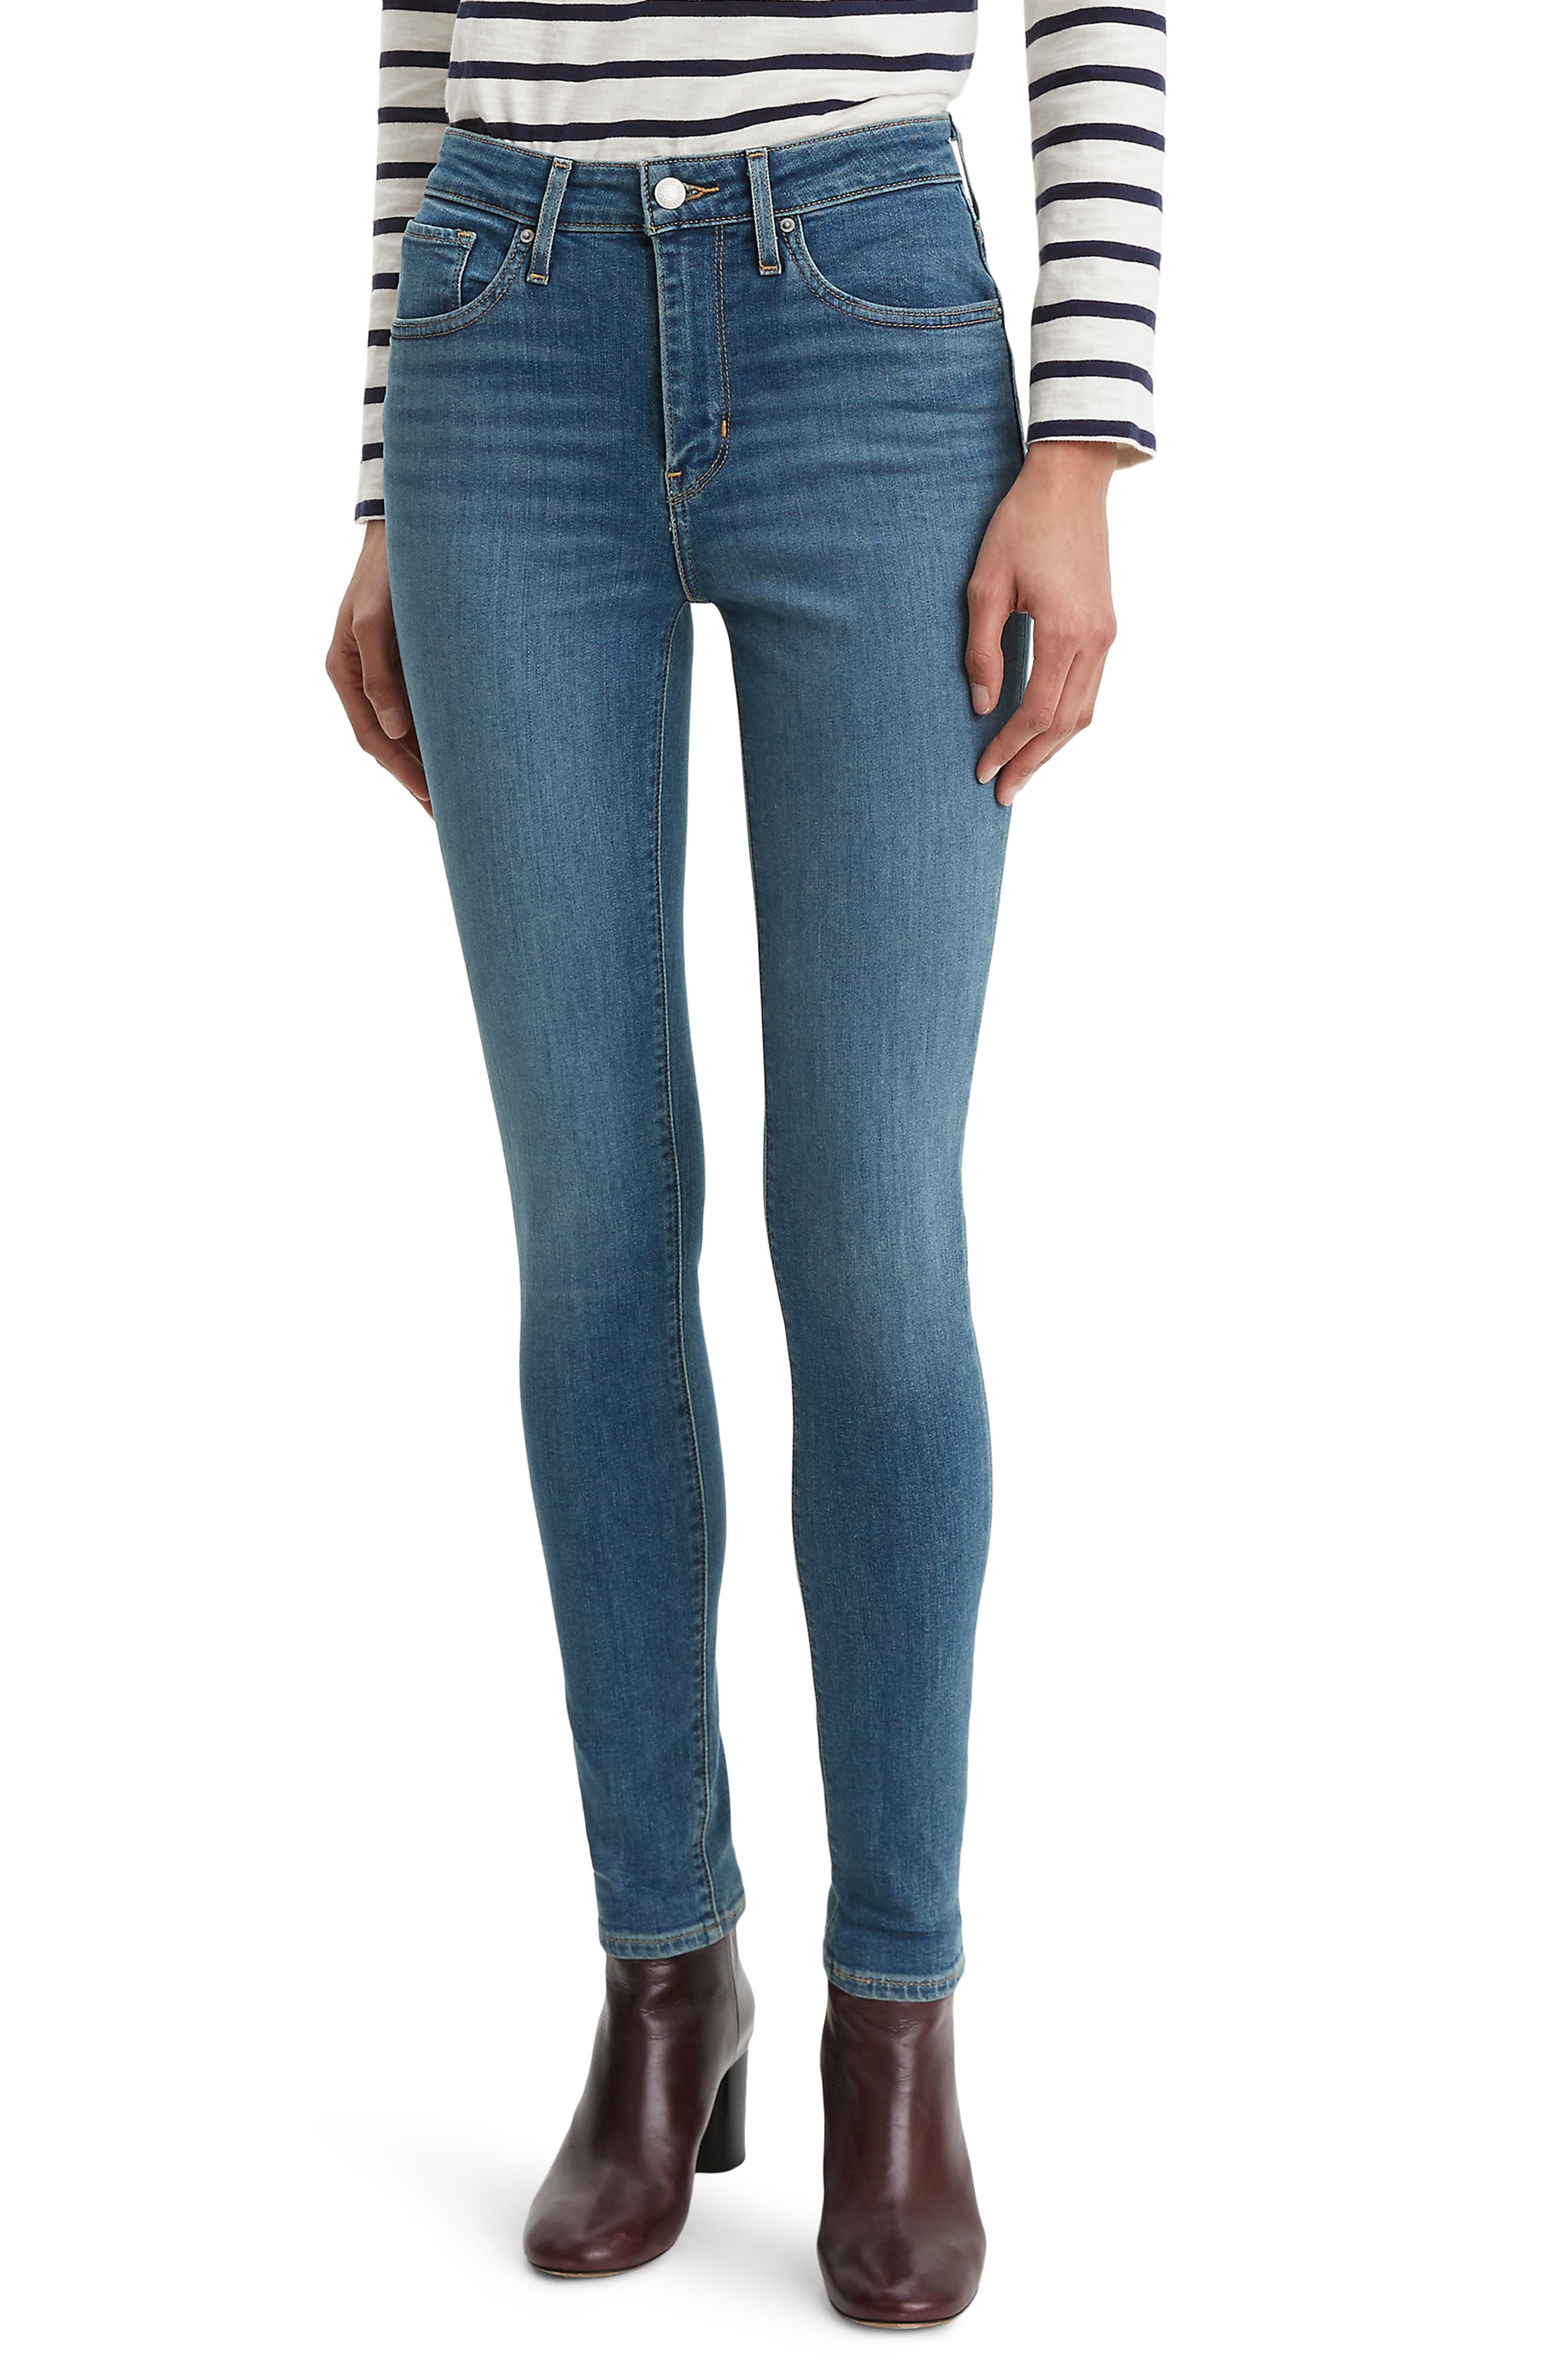 levi's 721 skinny jeans